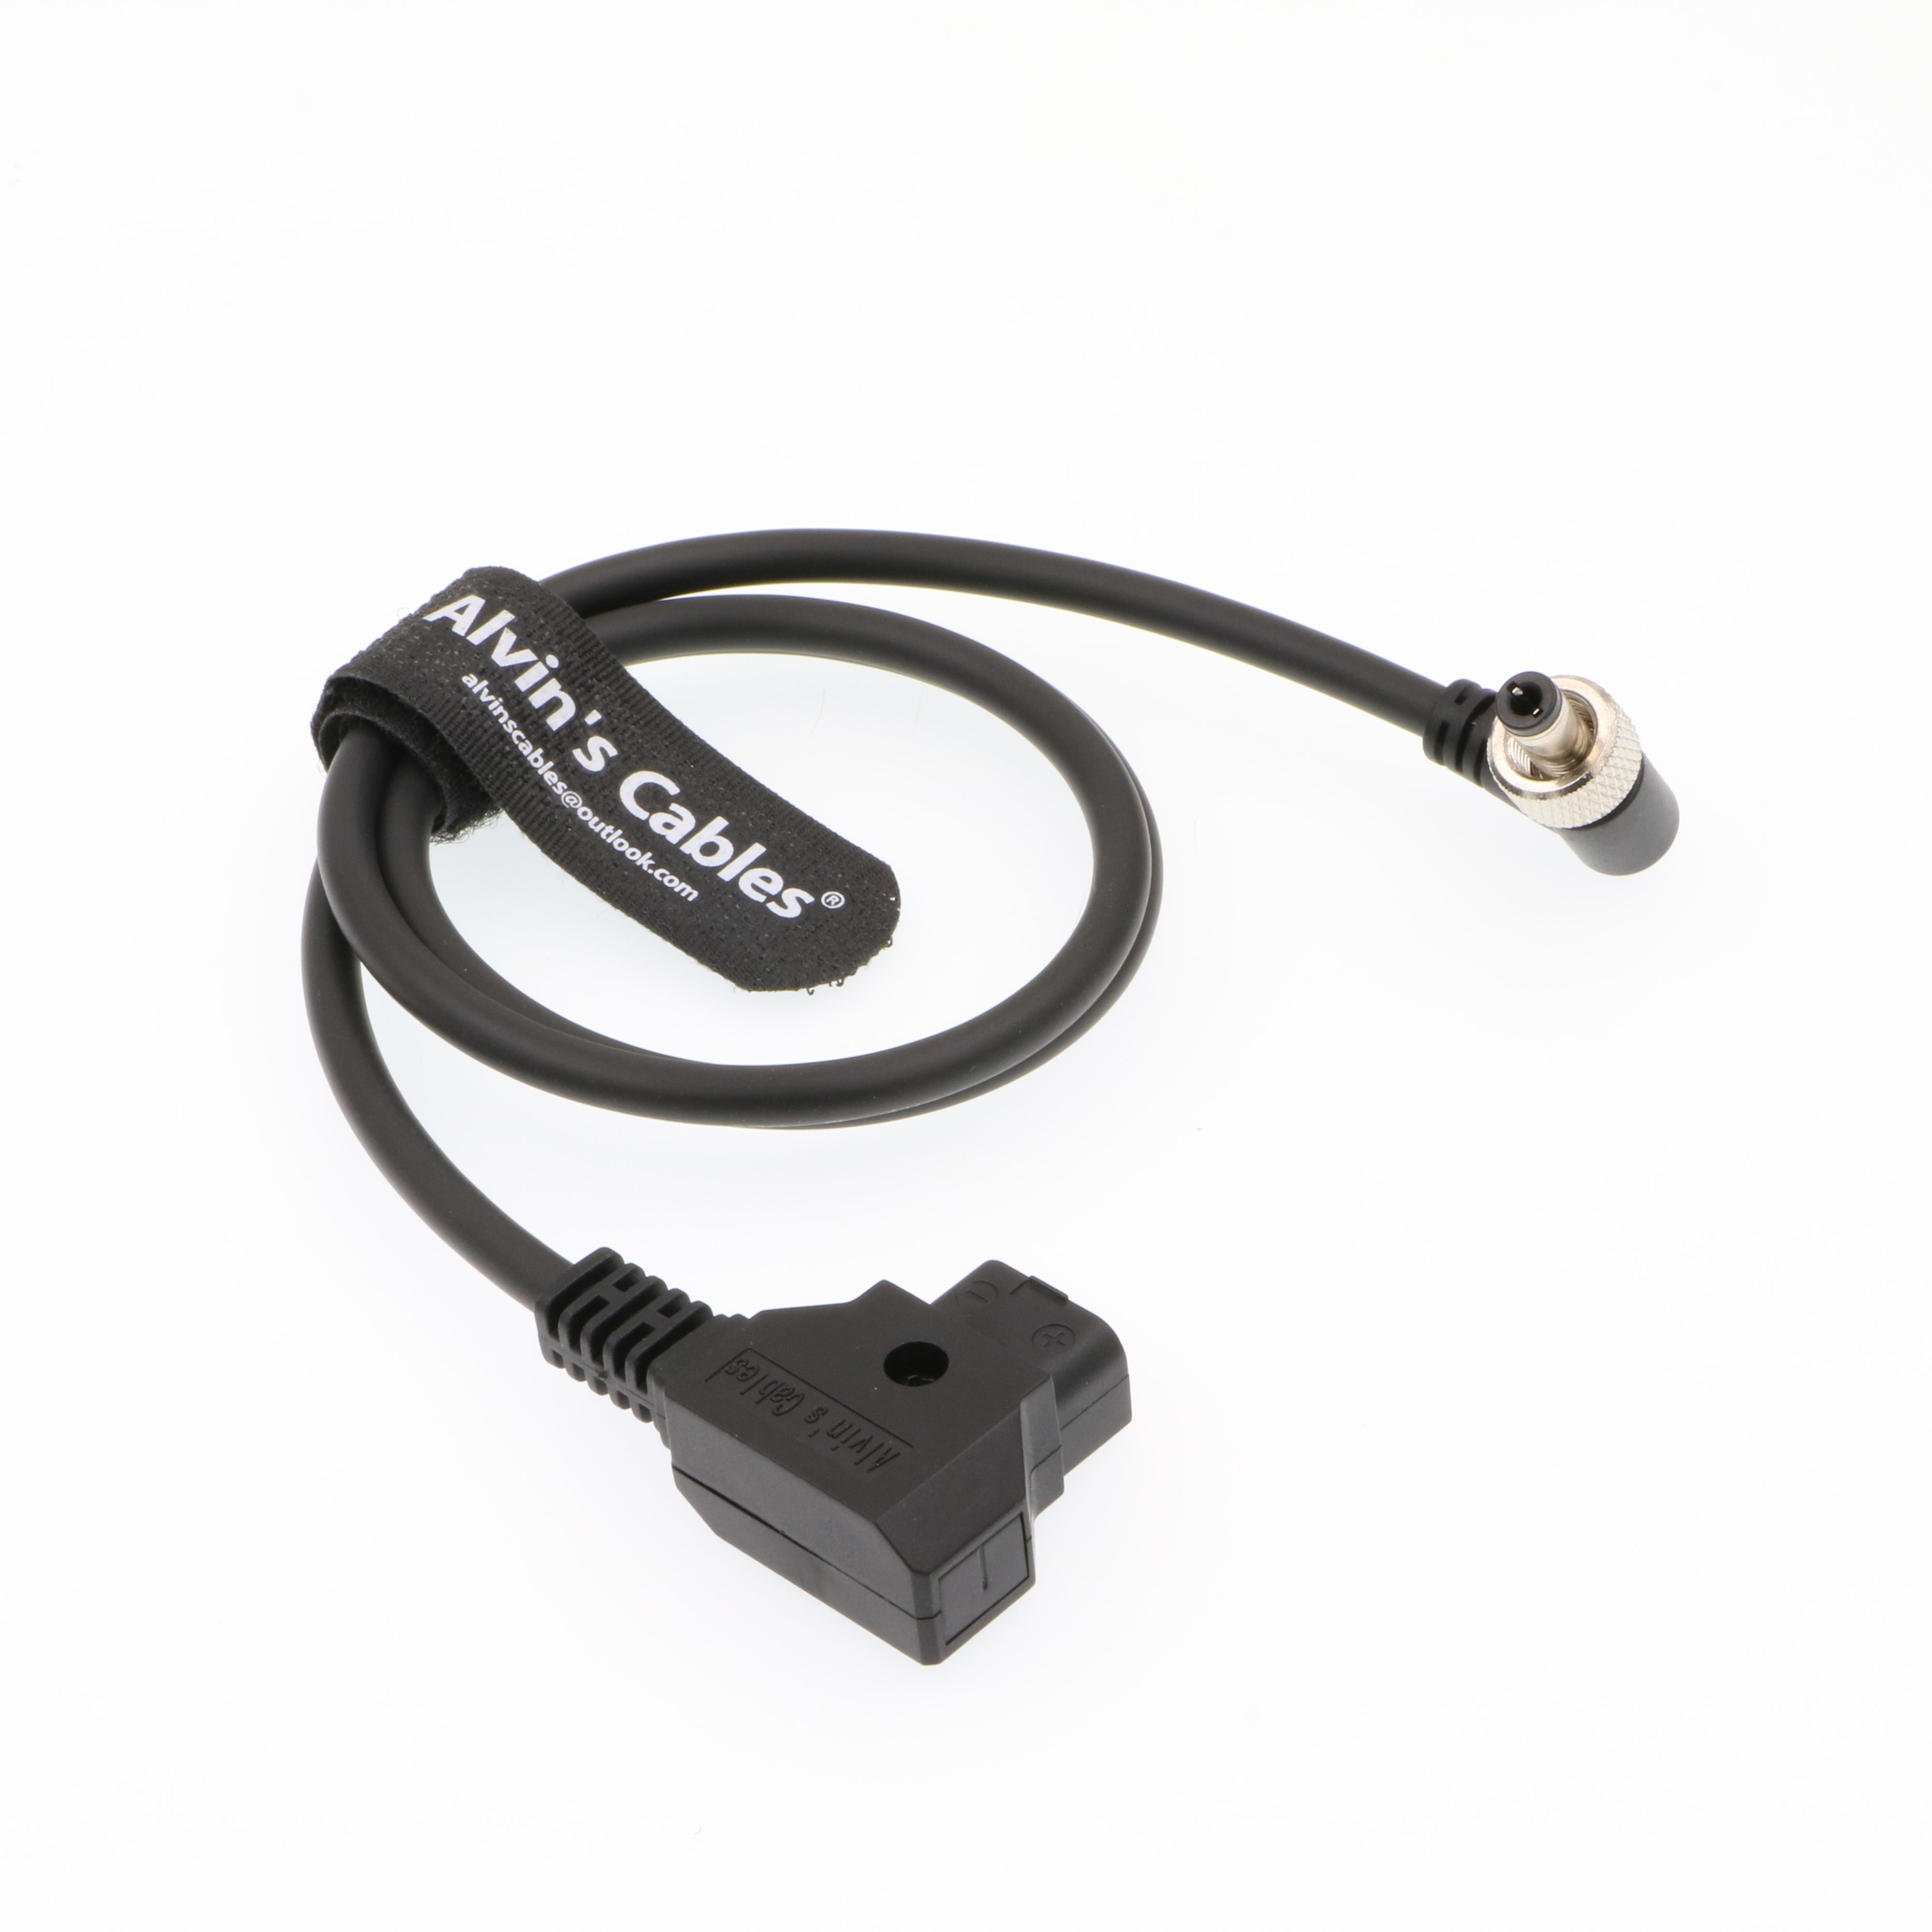 Alvin's Cables Atomos Monitor Stromkabel rechtwinkliger Locking DC 5.5 2.1 für Touchscreen-Display-Videogeräte PIX-E7 PIX-E5 Hollyland Mars 400s